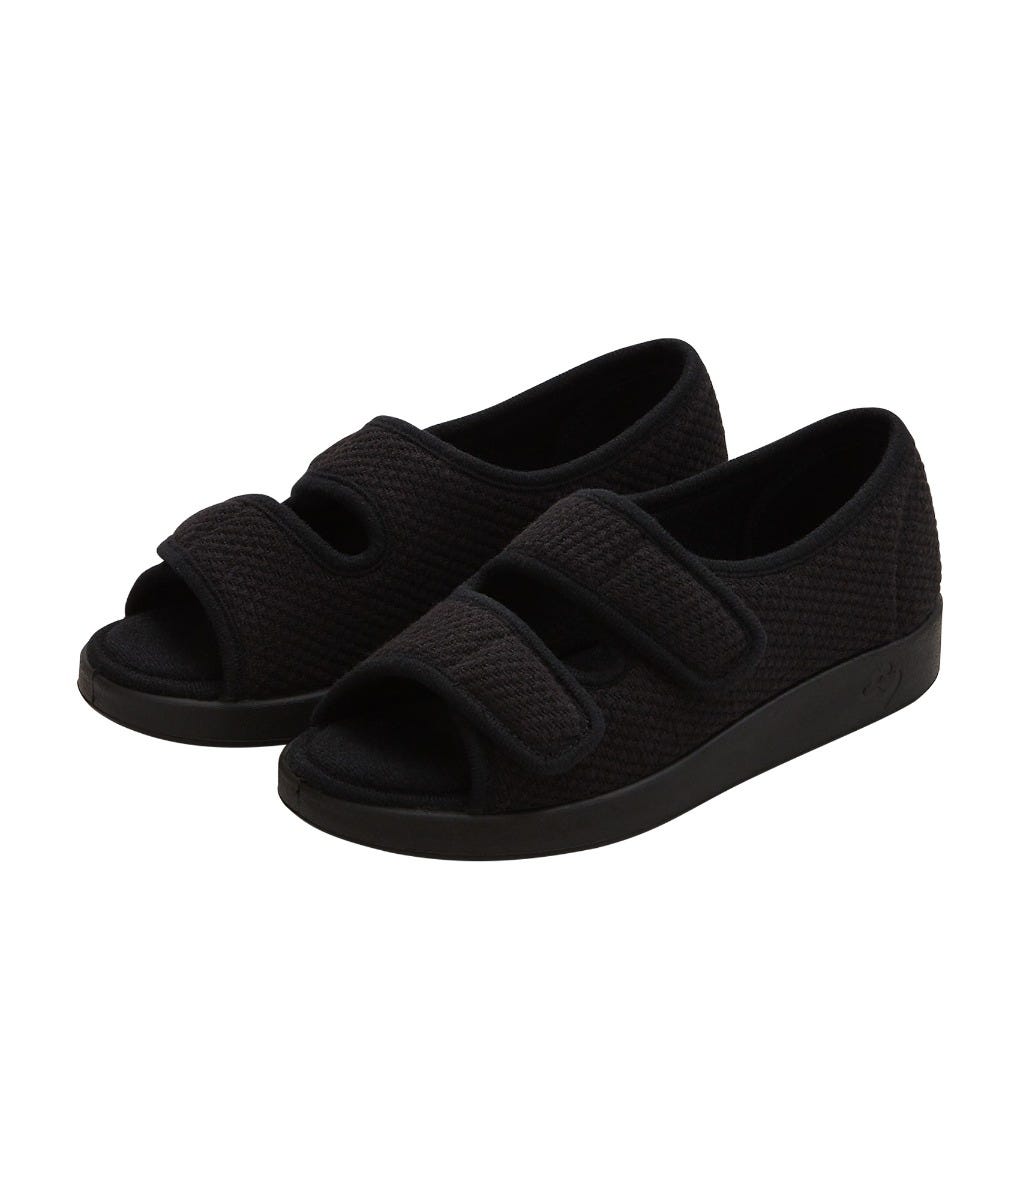 Silverts Women's Easy Closure Sandals - Black - 7